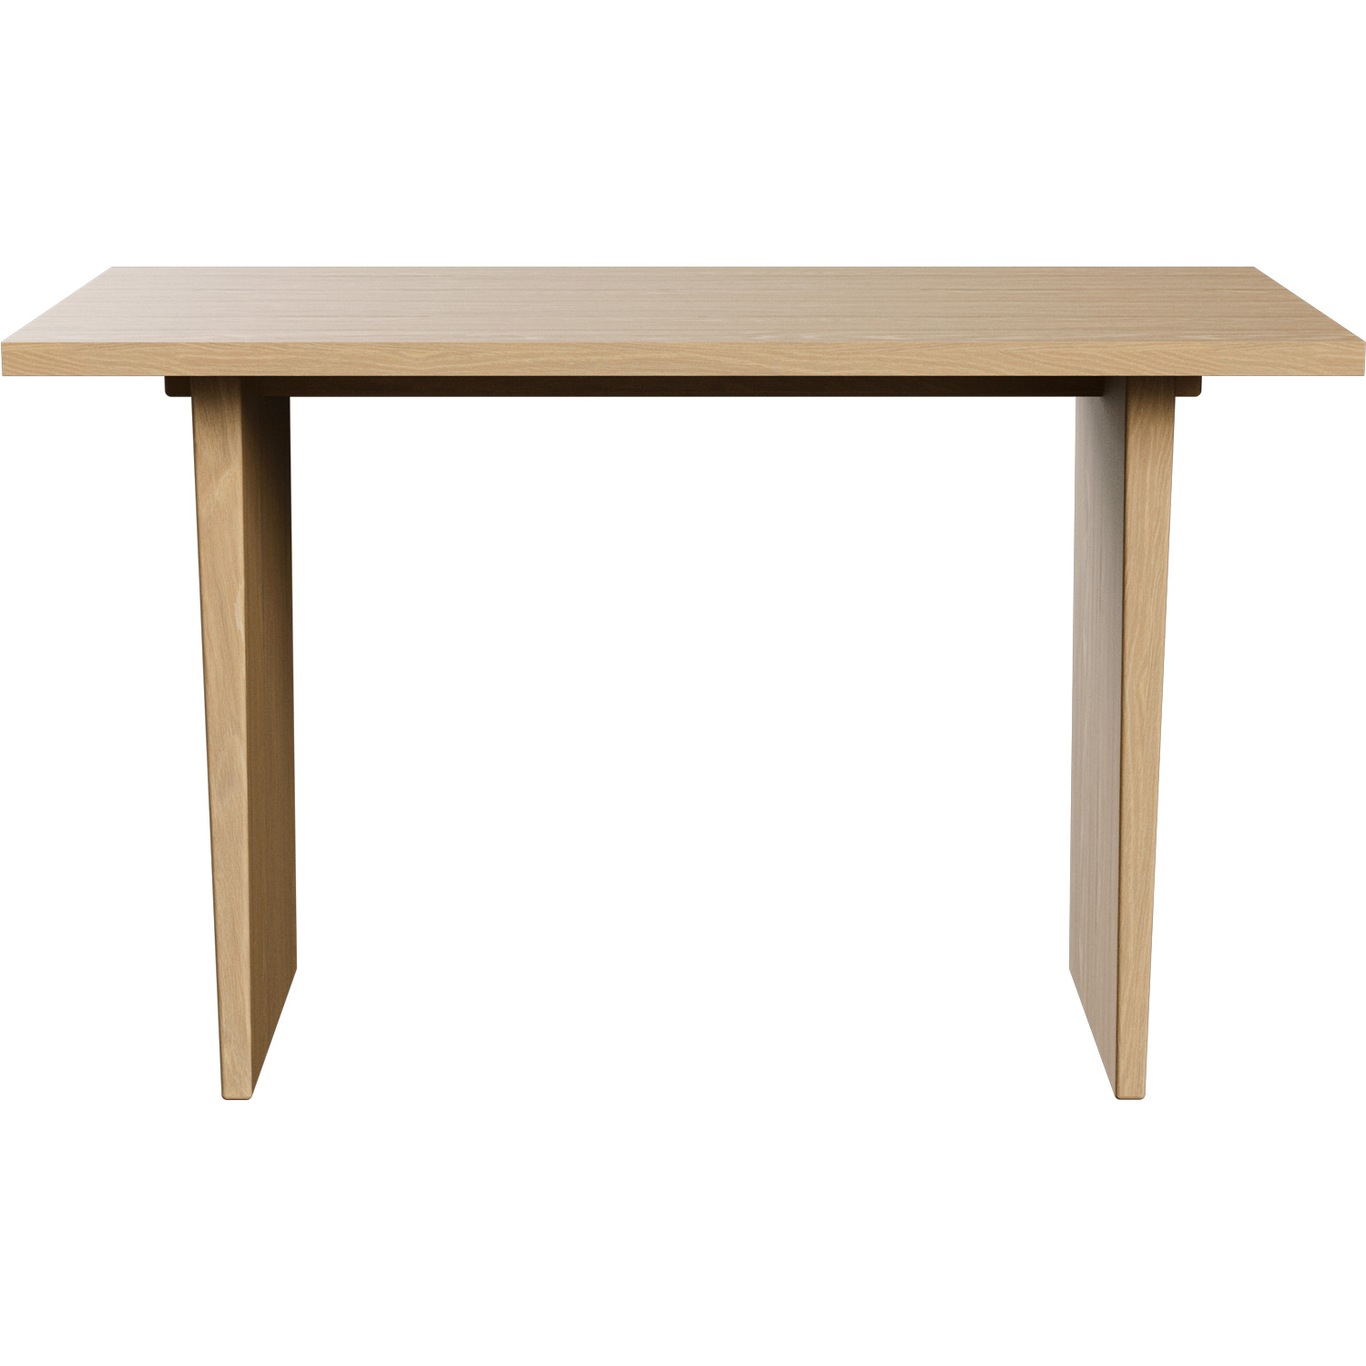 Private Desk 120x60 cm, Light Stained Oak